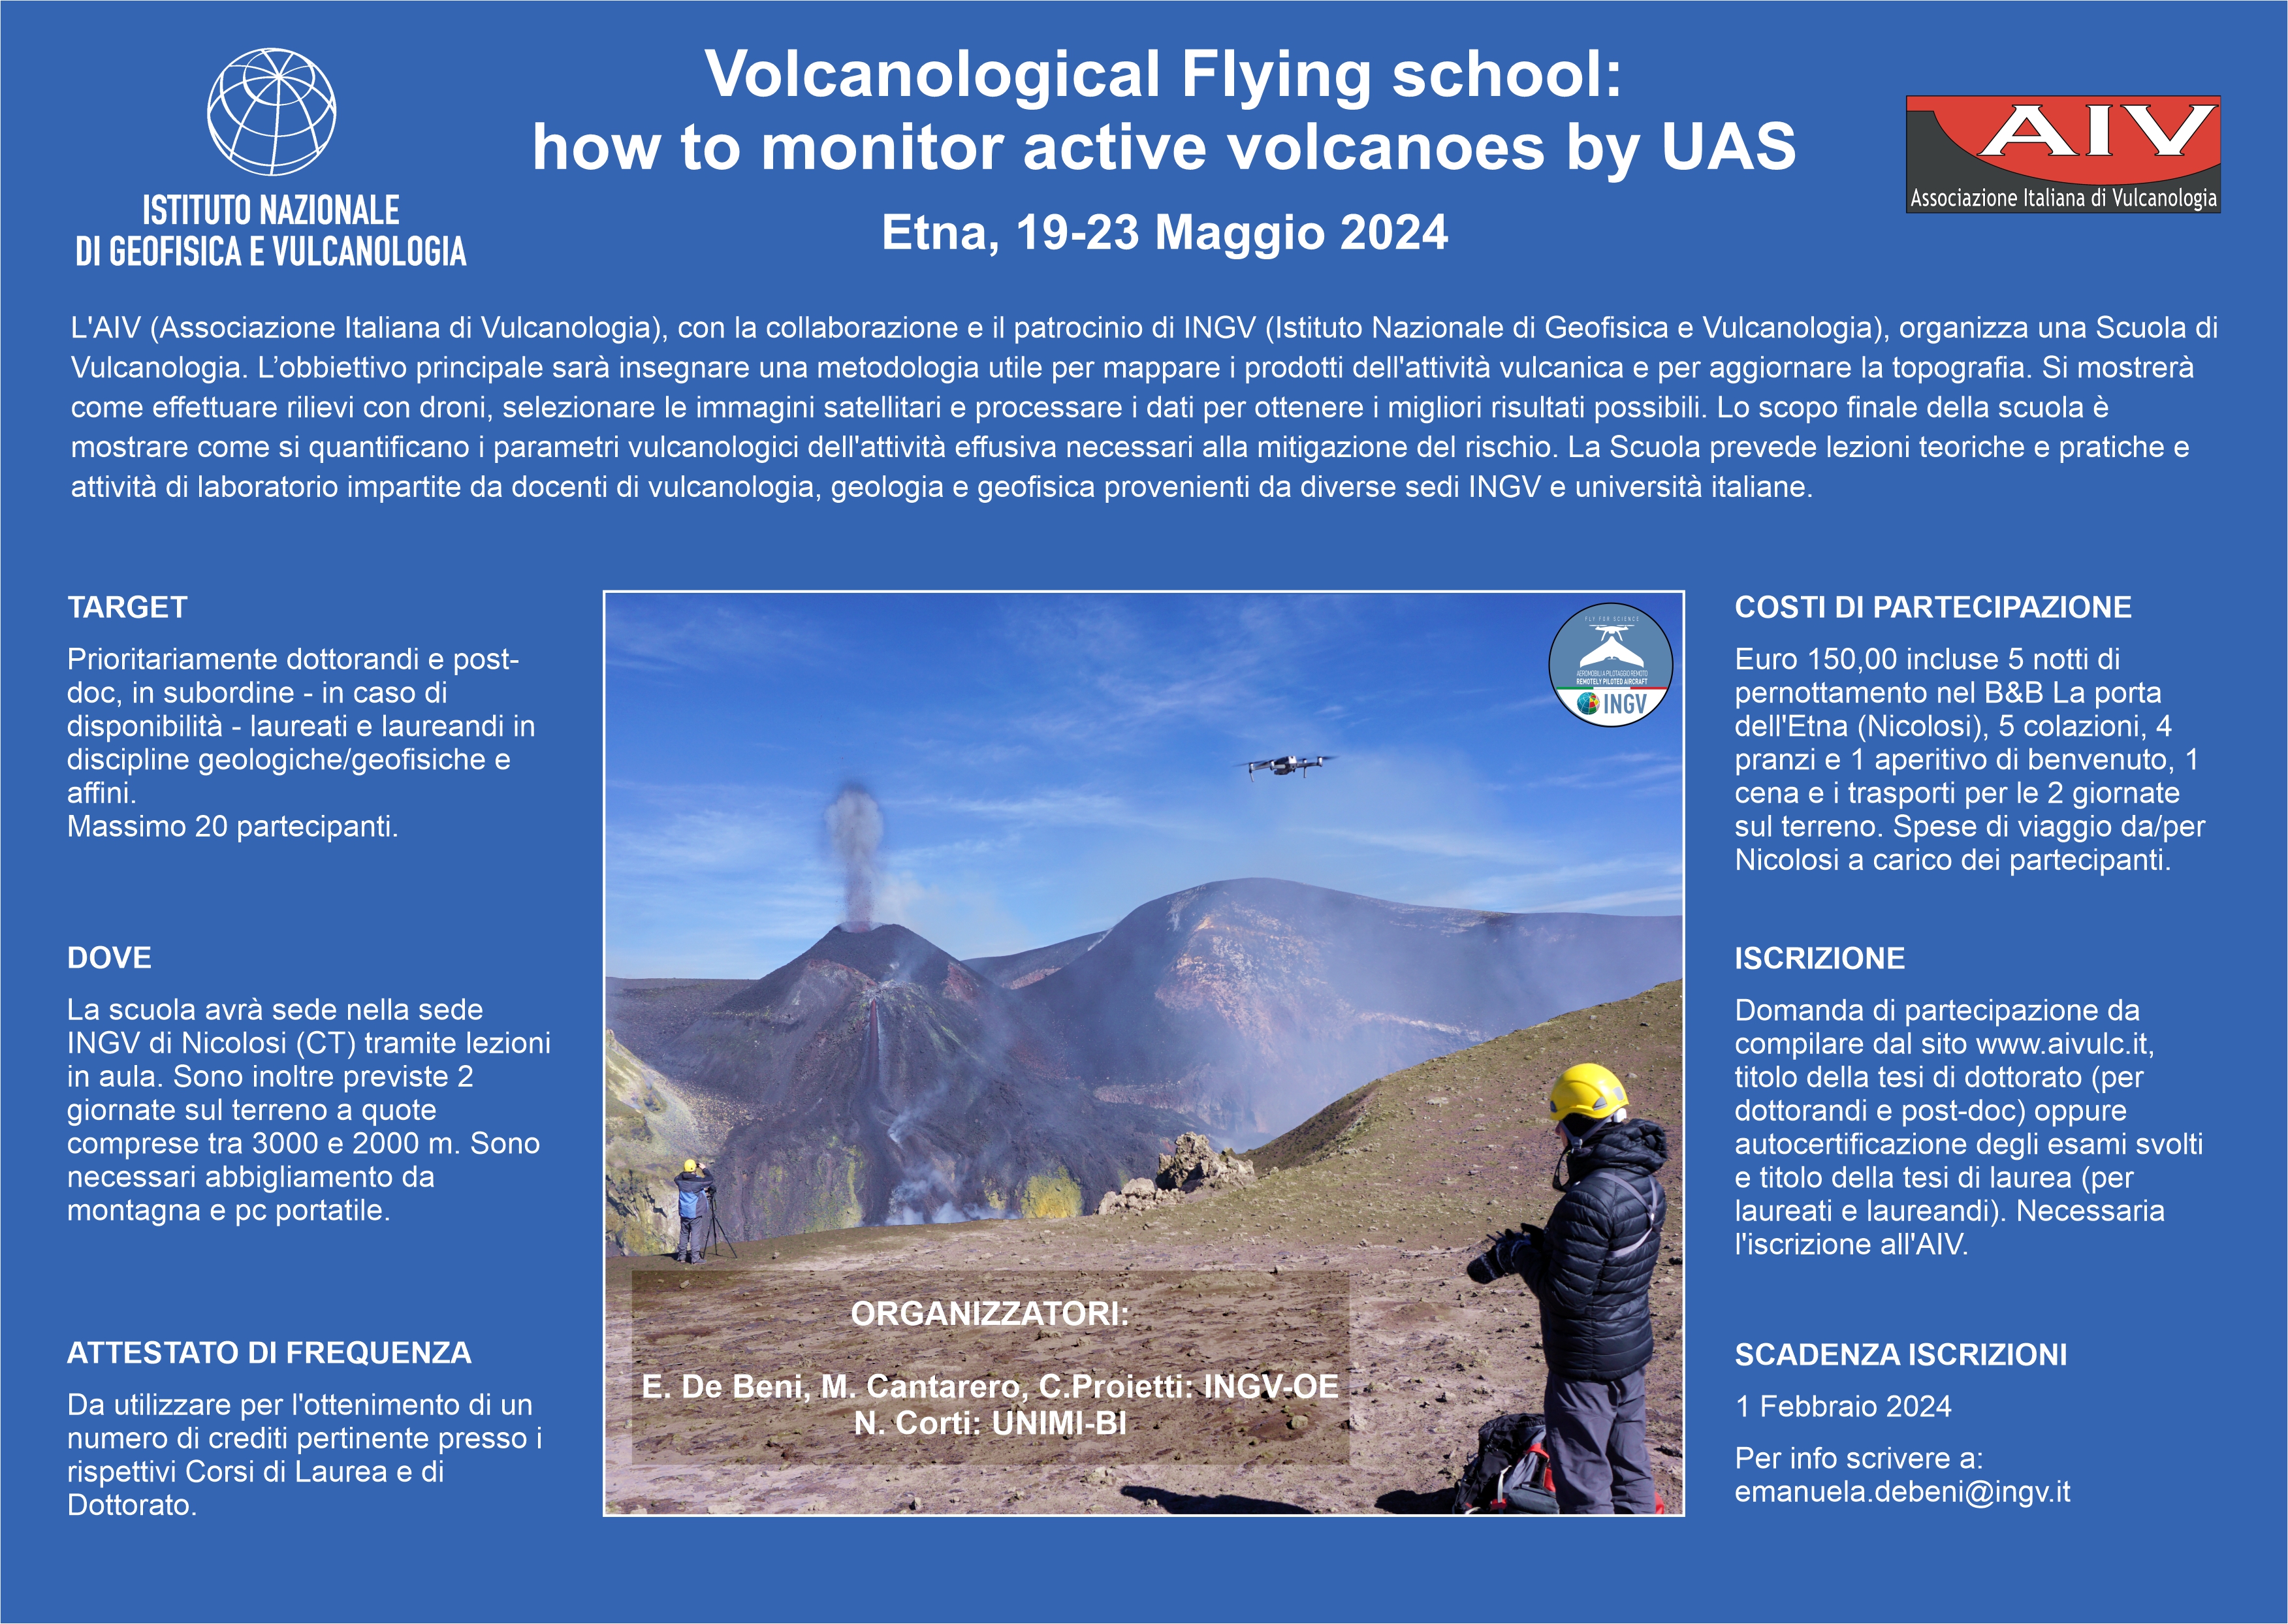 Volcanological Flying School 2023